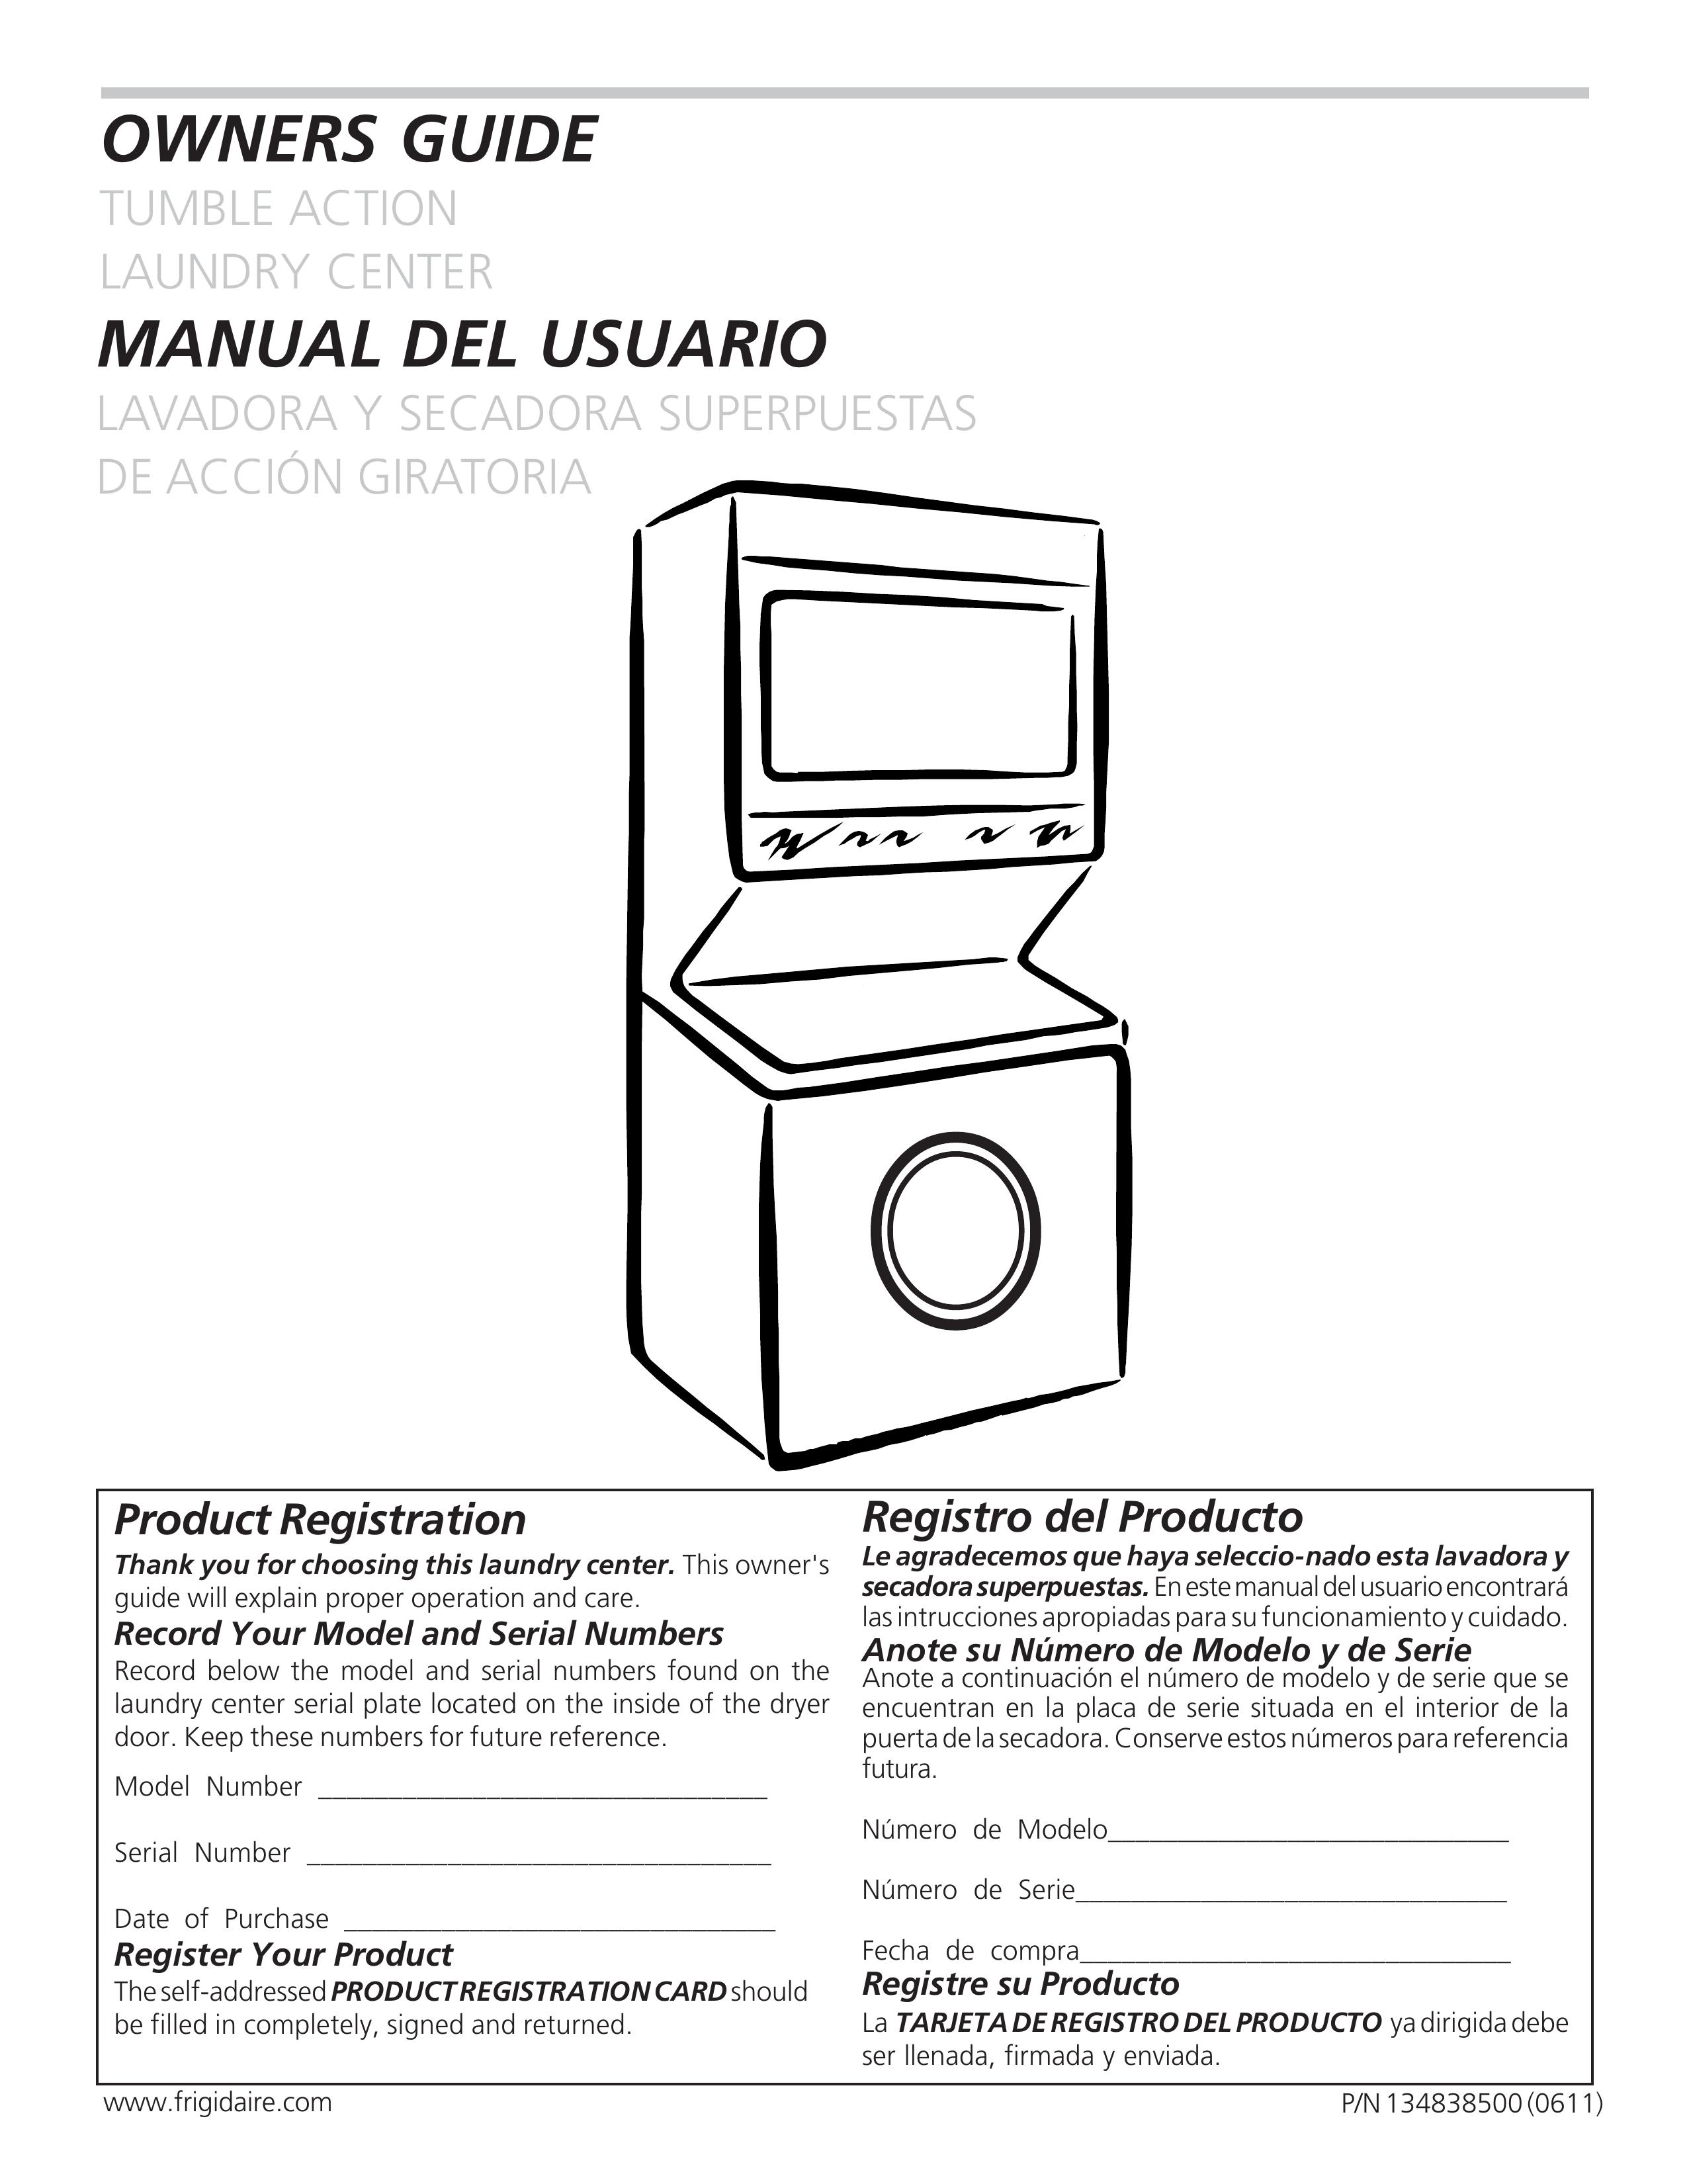 Frigidaire TUMBLE ACTION LAUNDRY CENTER Washer/Dryer User Manual